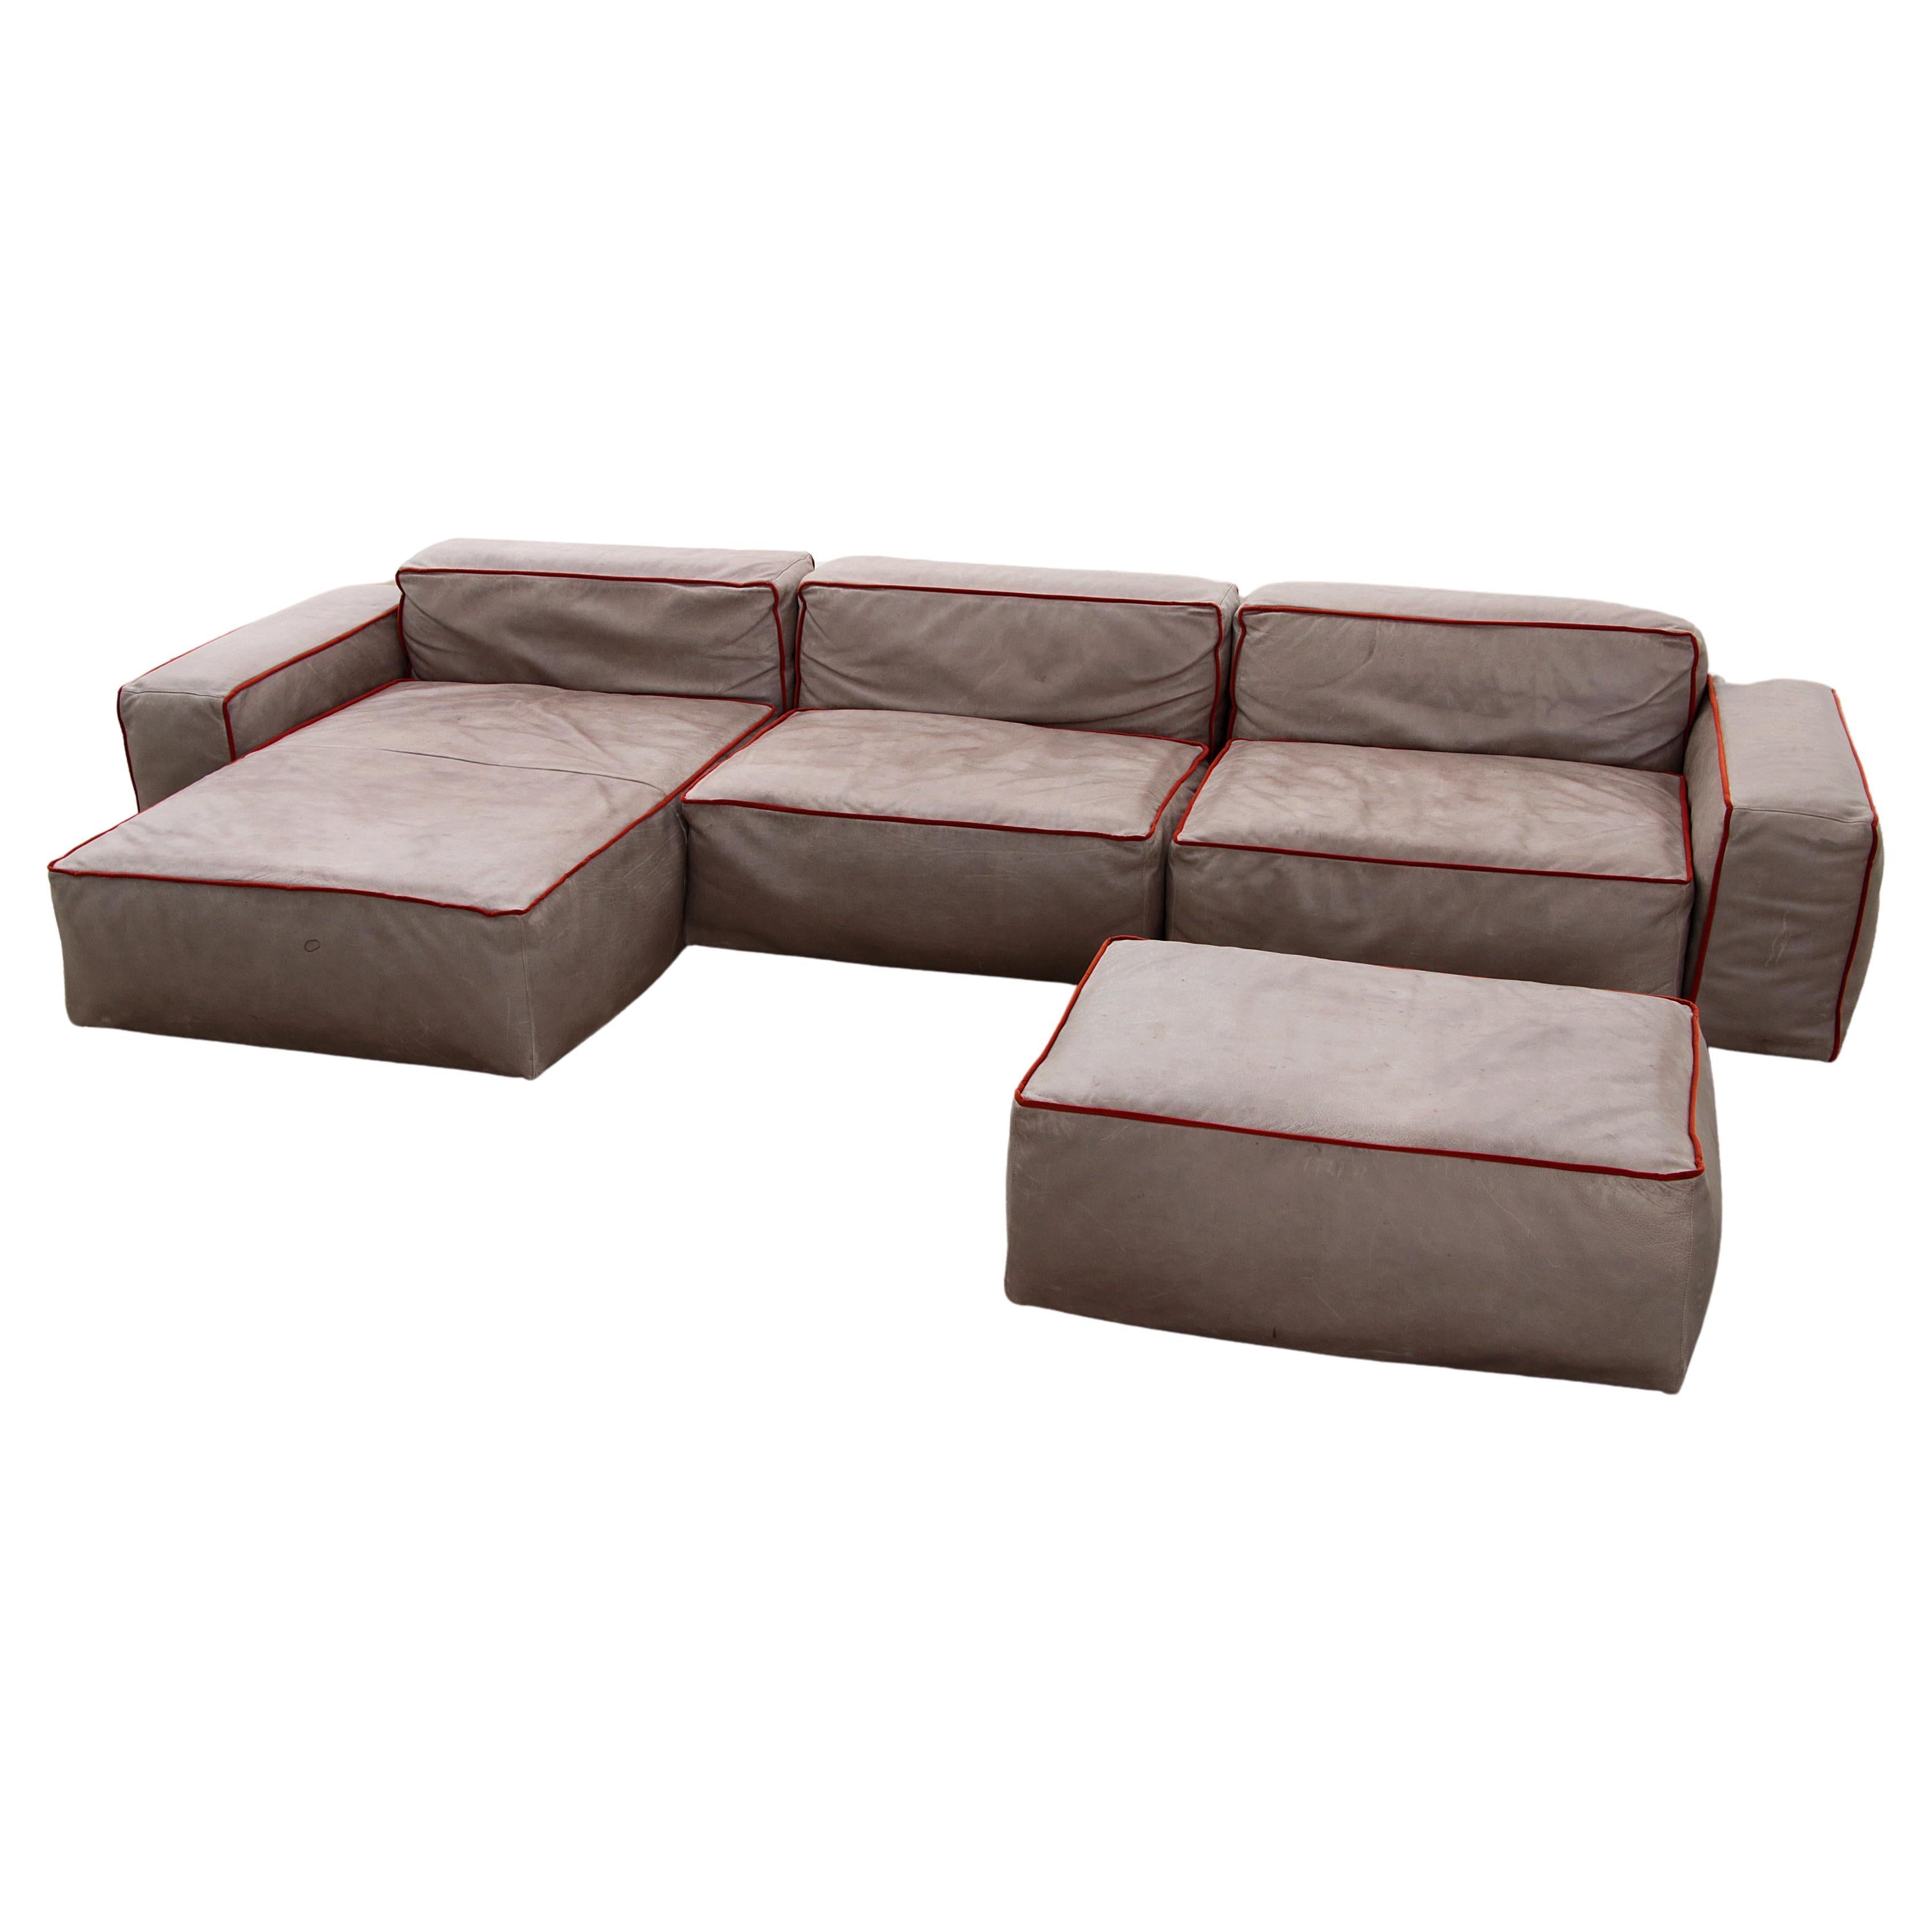 Modular Italian Leather Sofa Riff from Flexteam For Sale